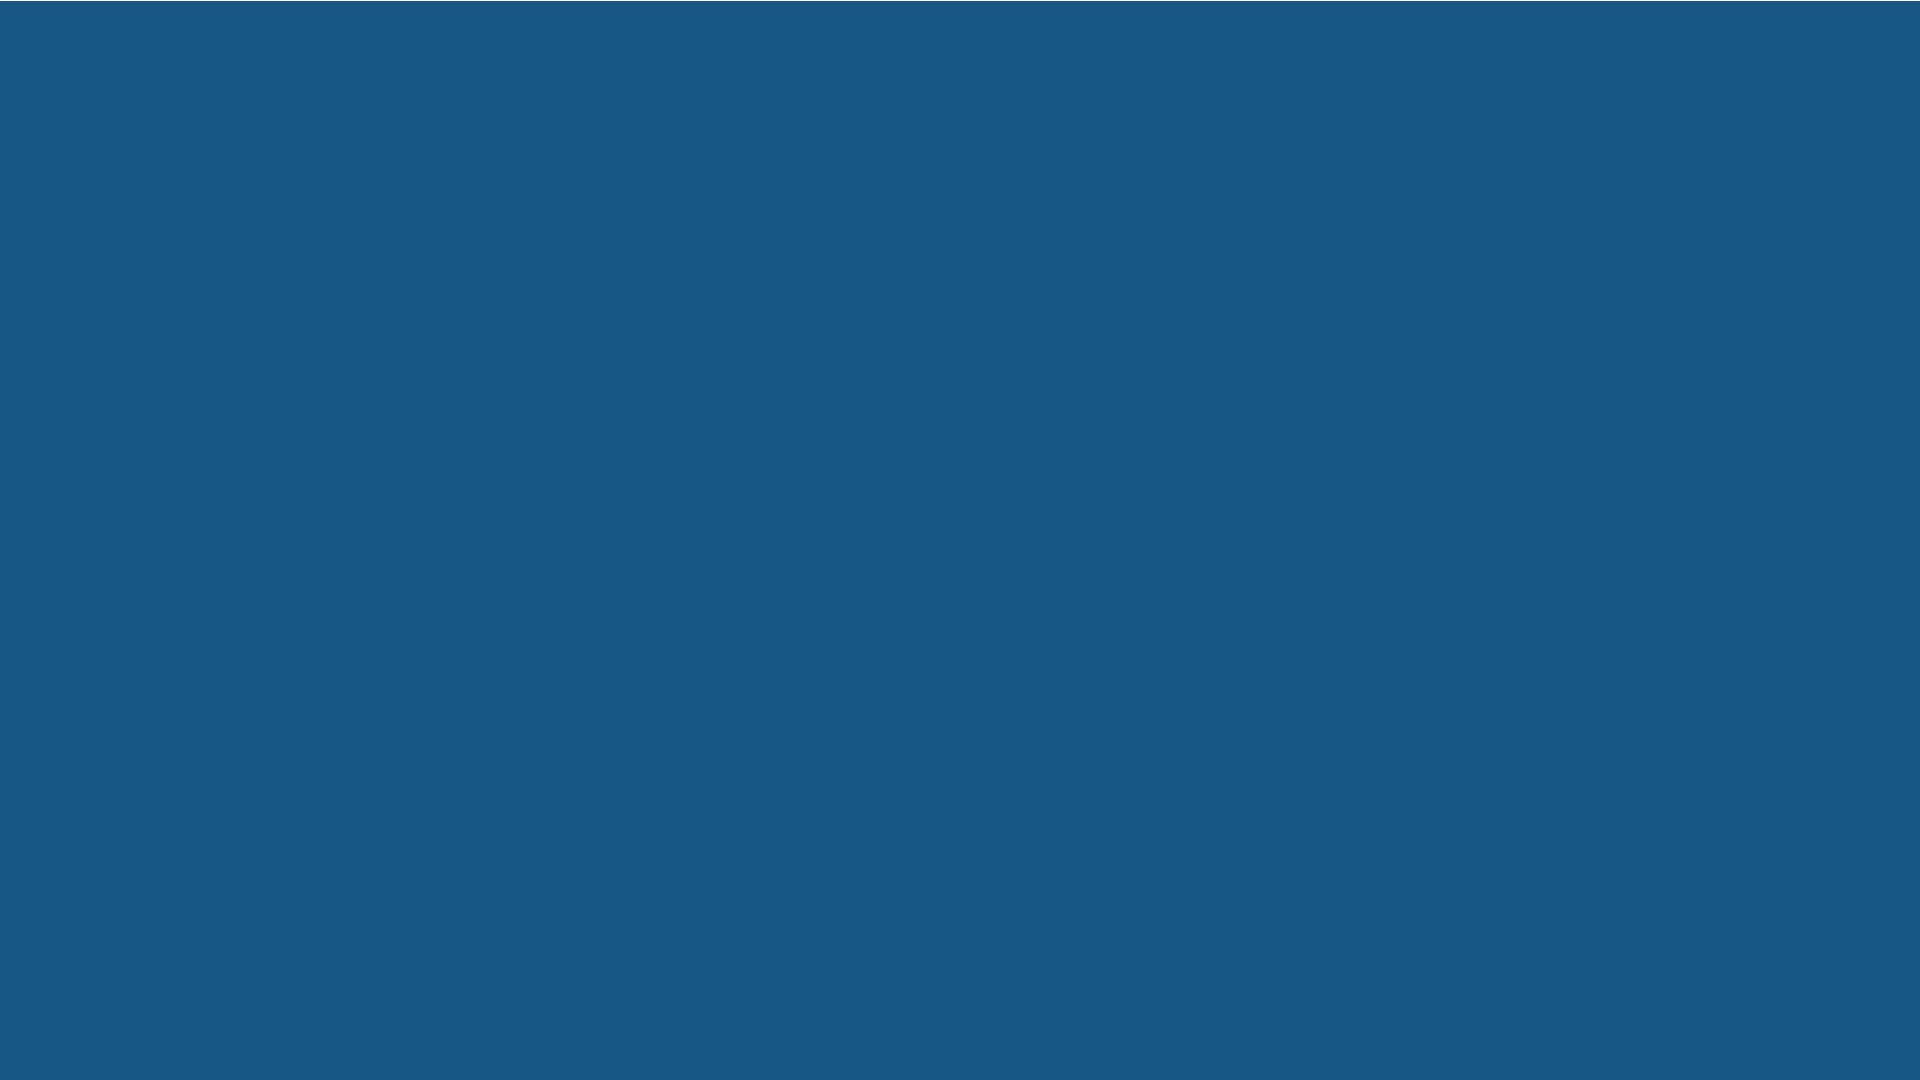 Capri Blue Solid Color Background